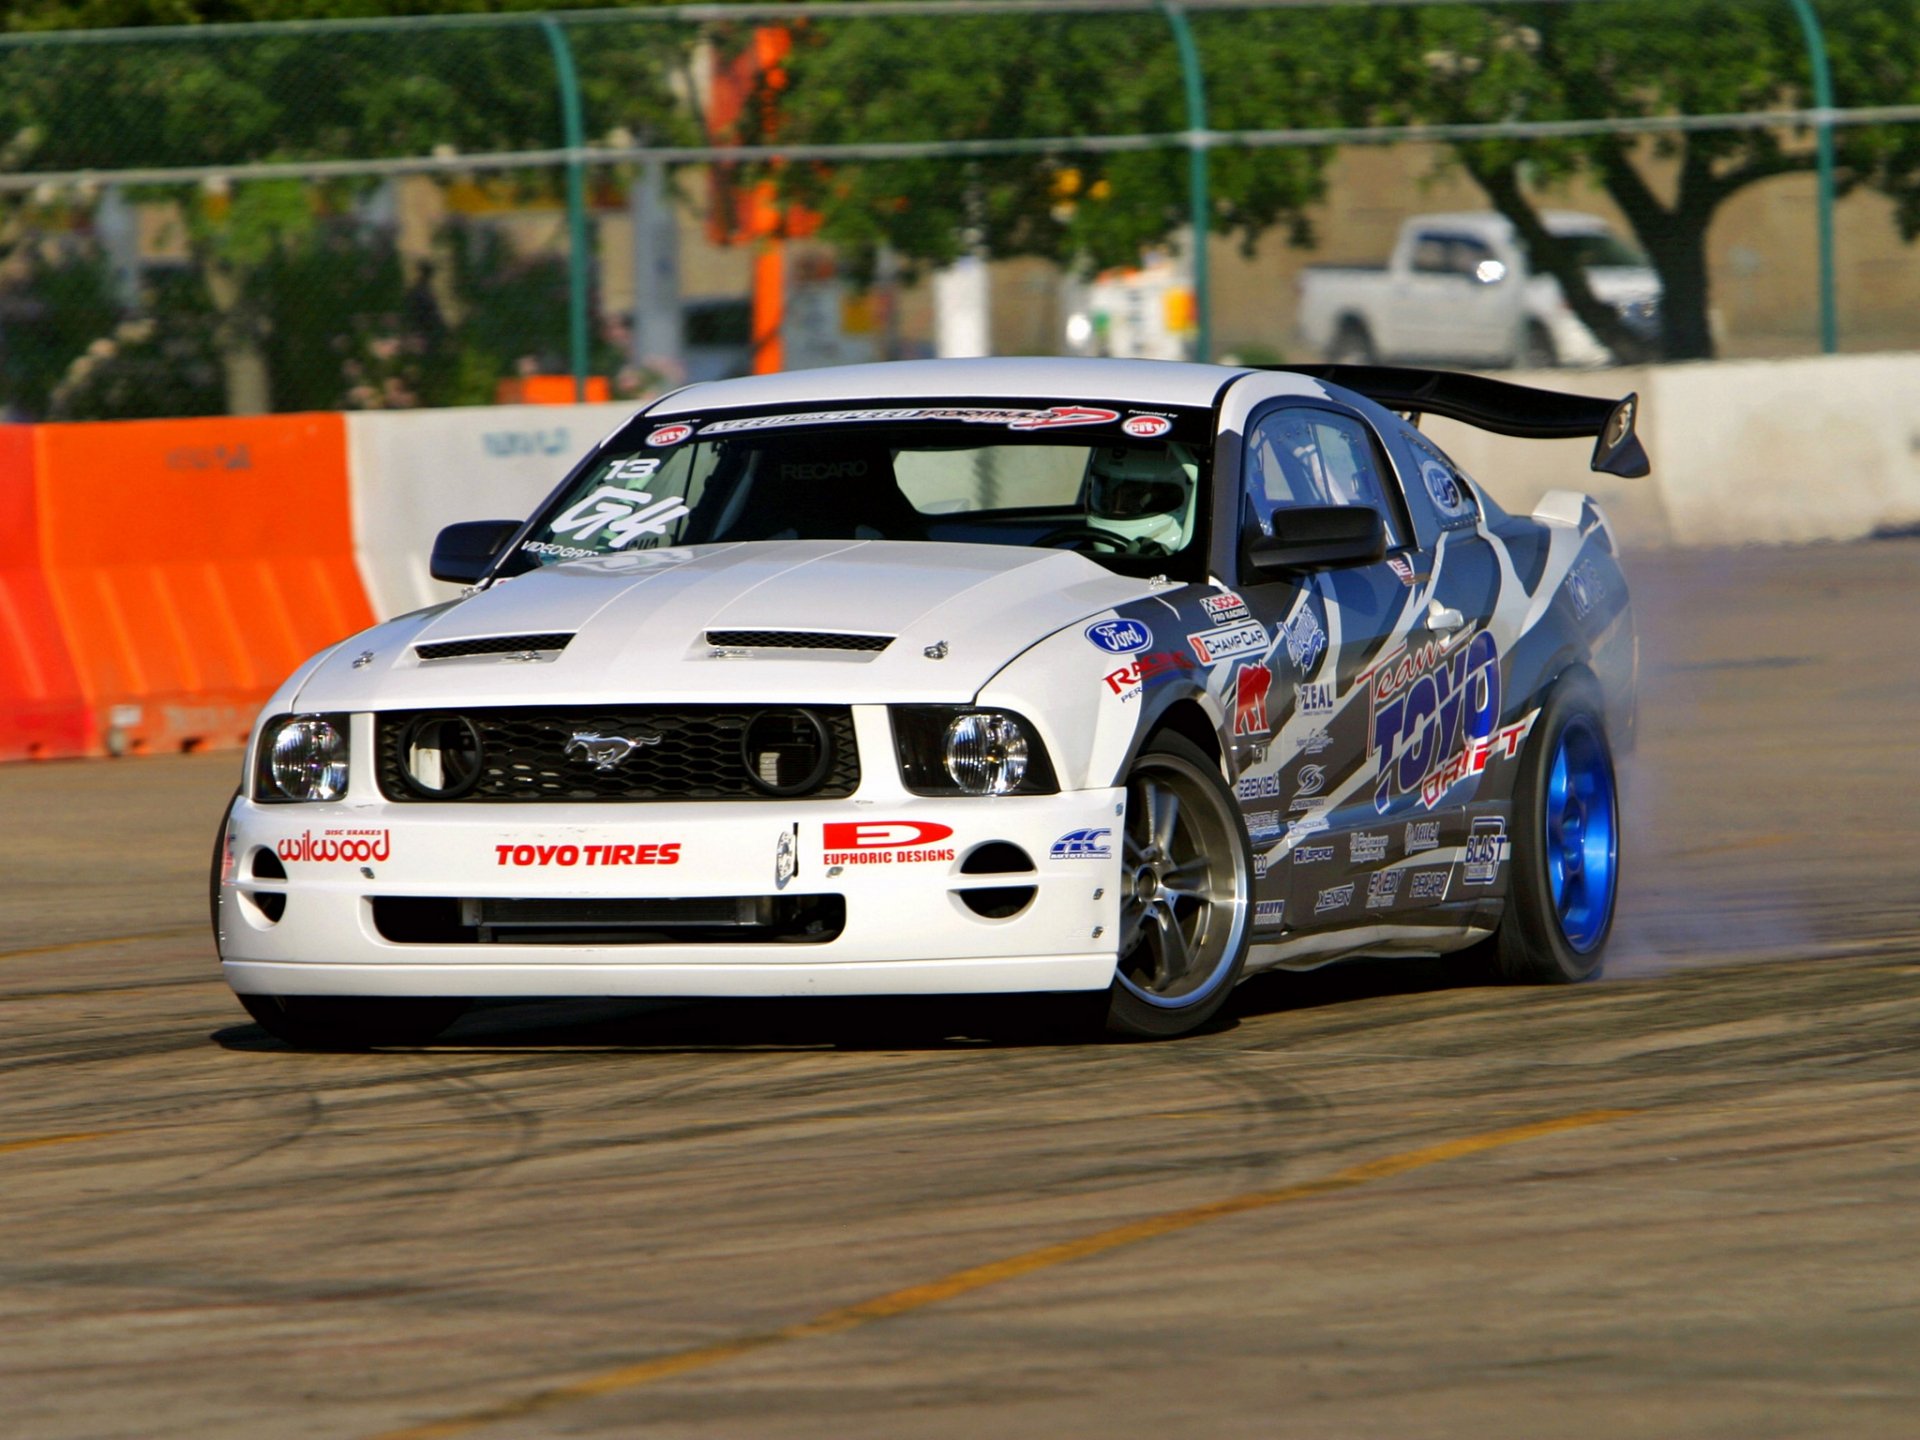 Mustang Gt Formula Drift 200508 Full Hd Wallpaper And Background